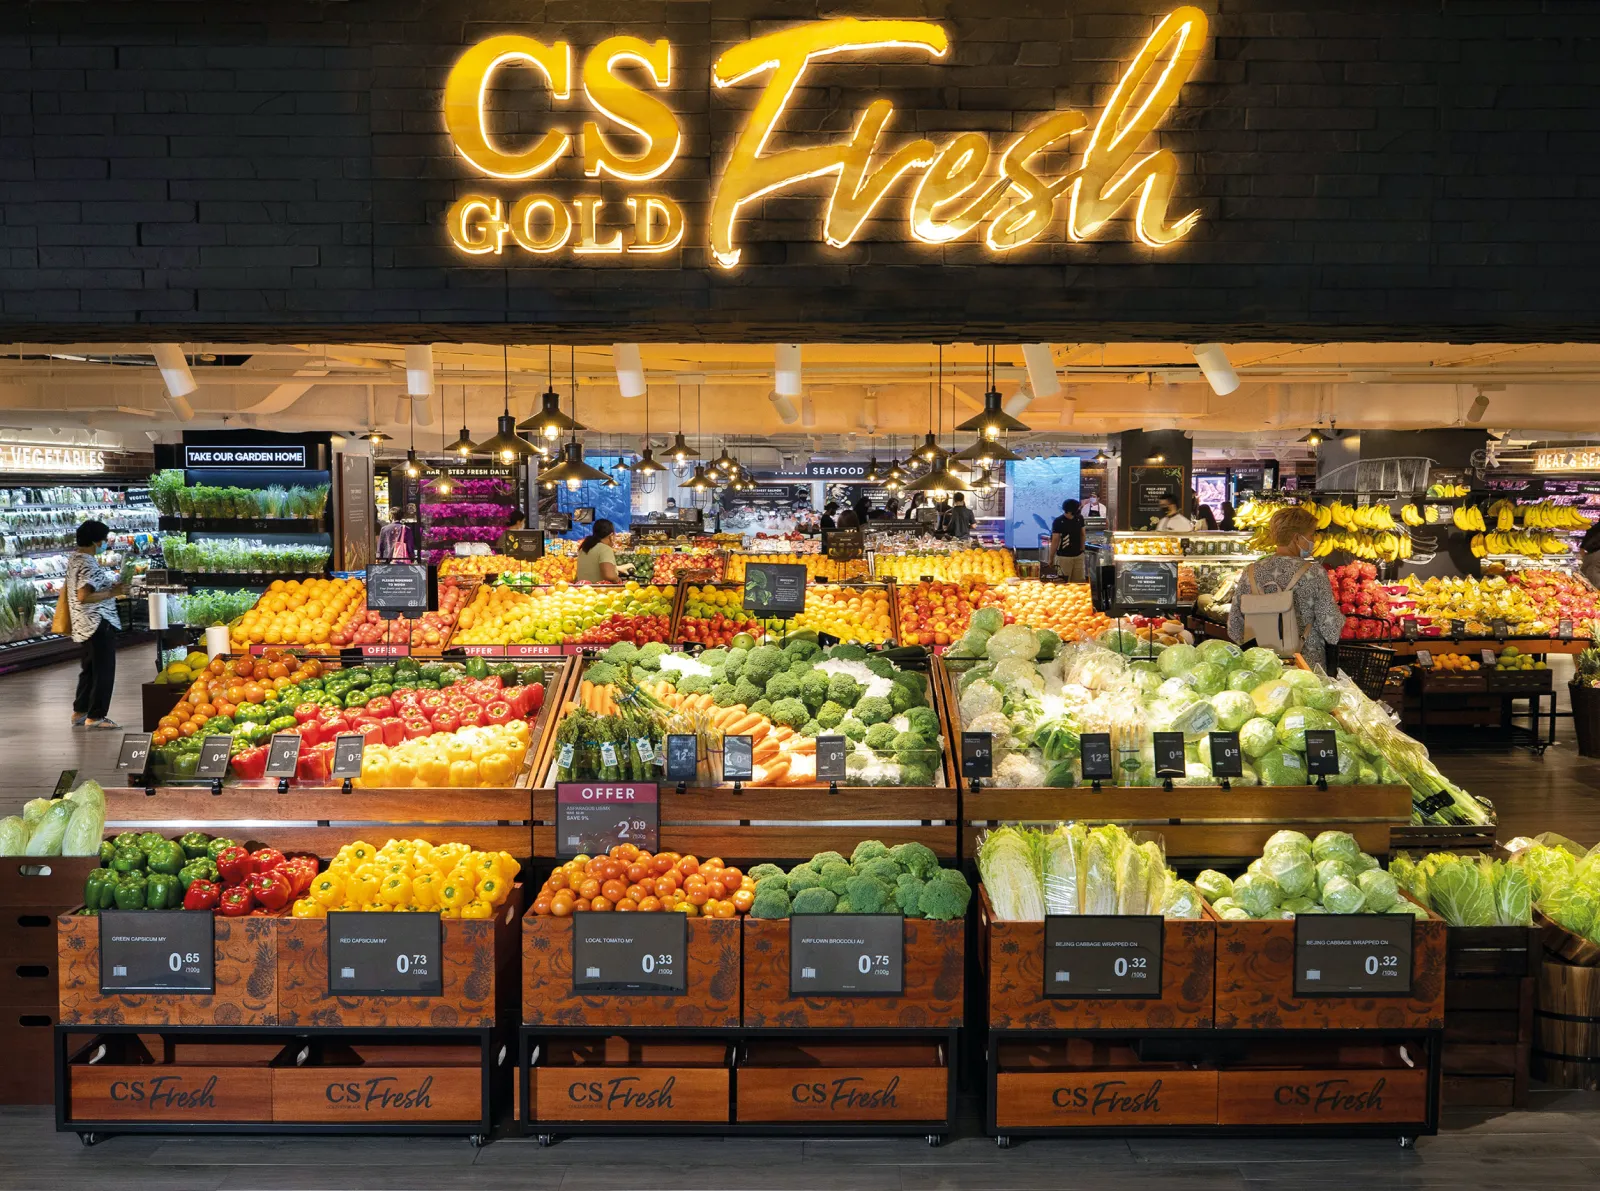 CS Fresh Gold Paragon, Singapore provides a premium supermarket experience